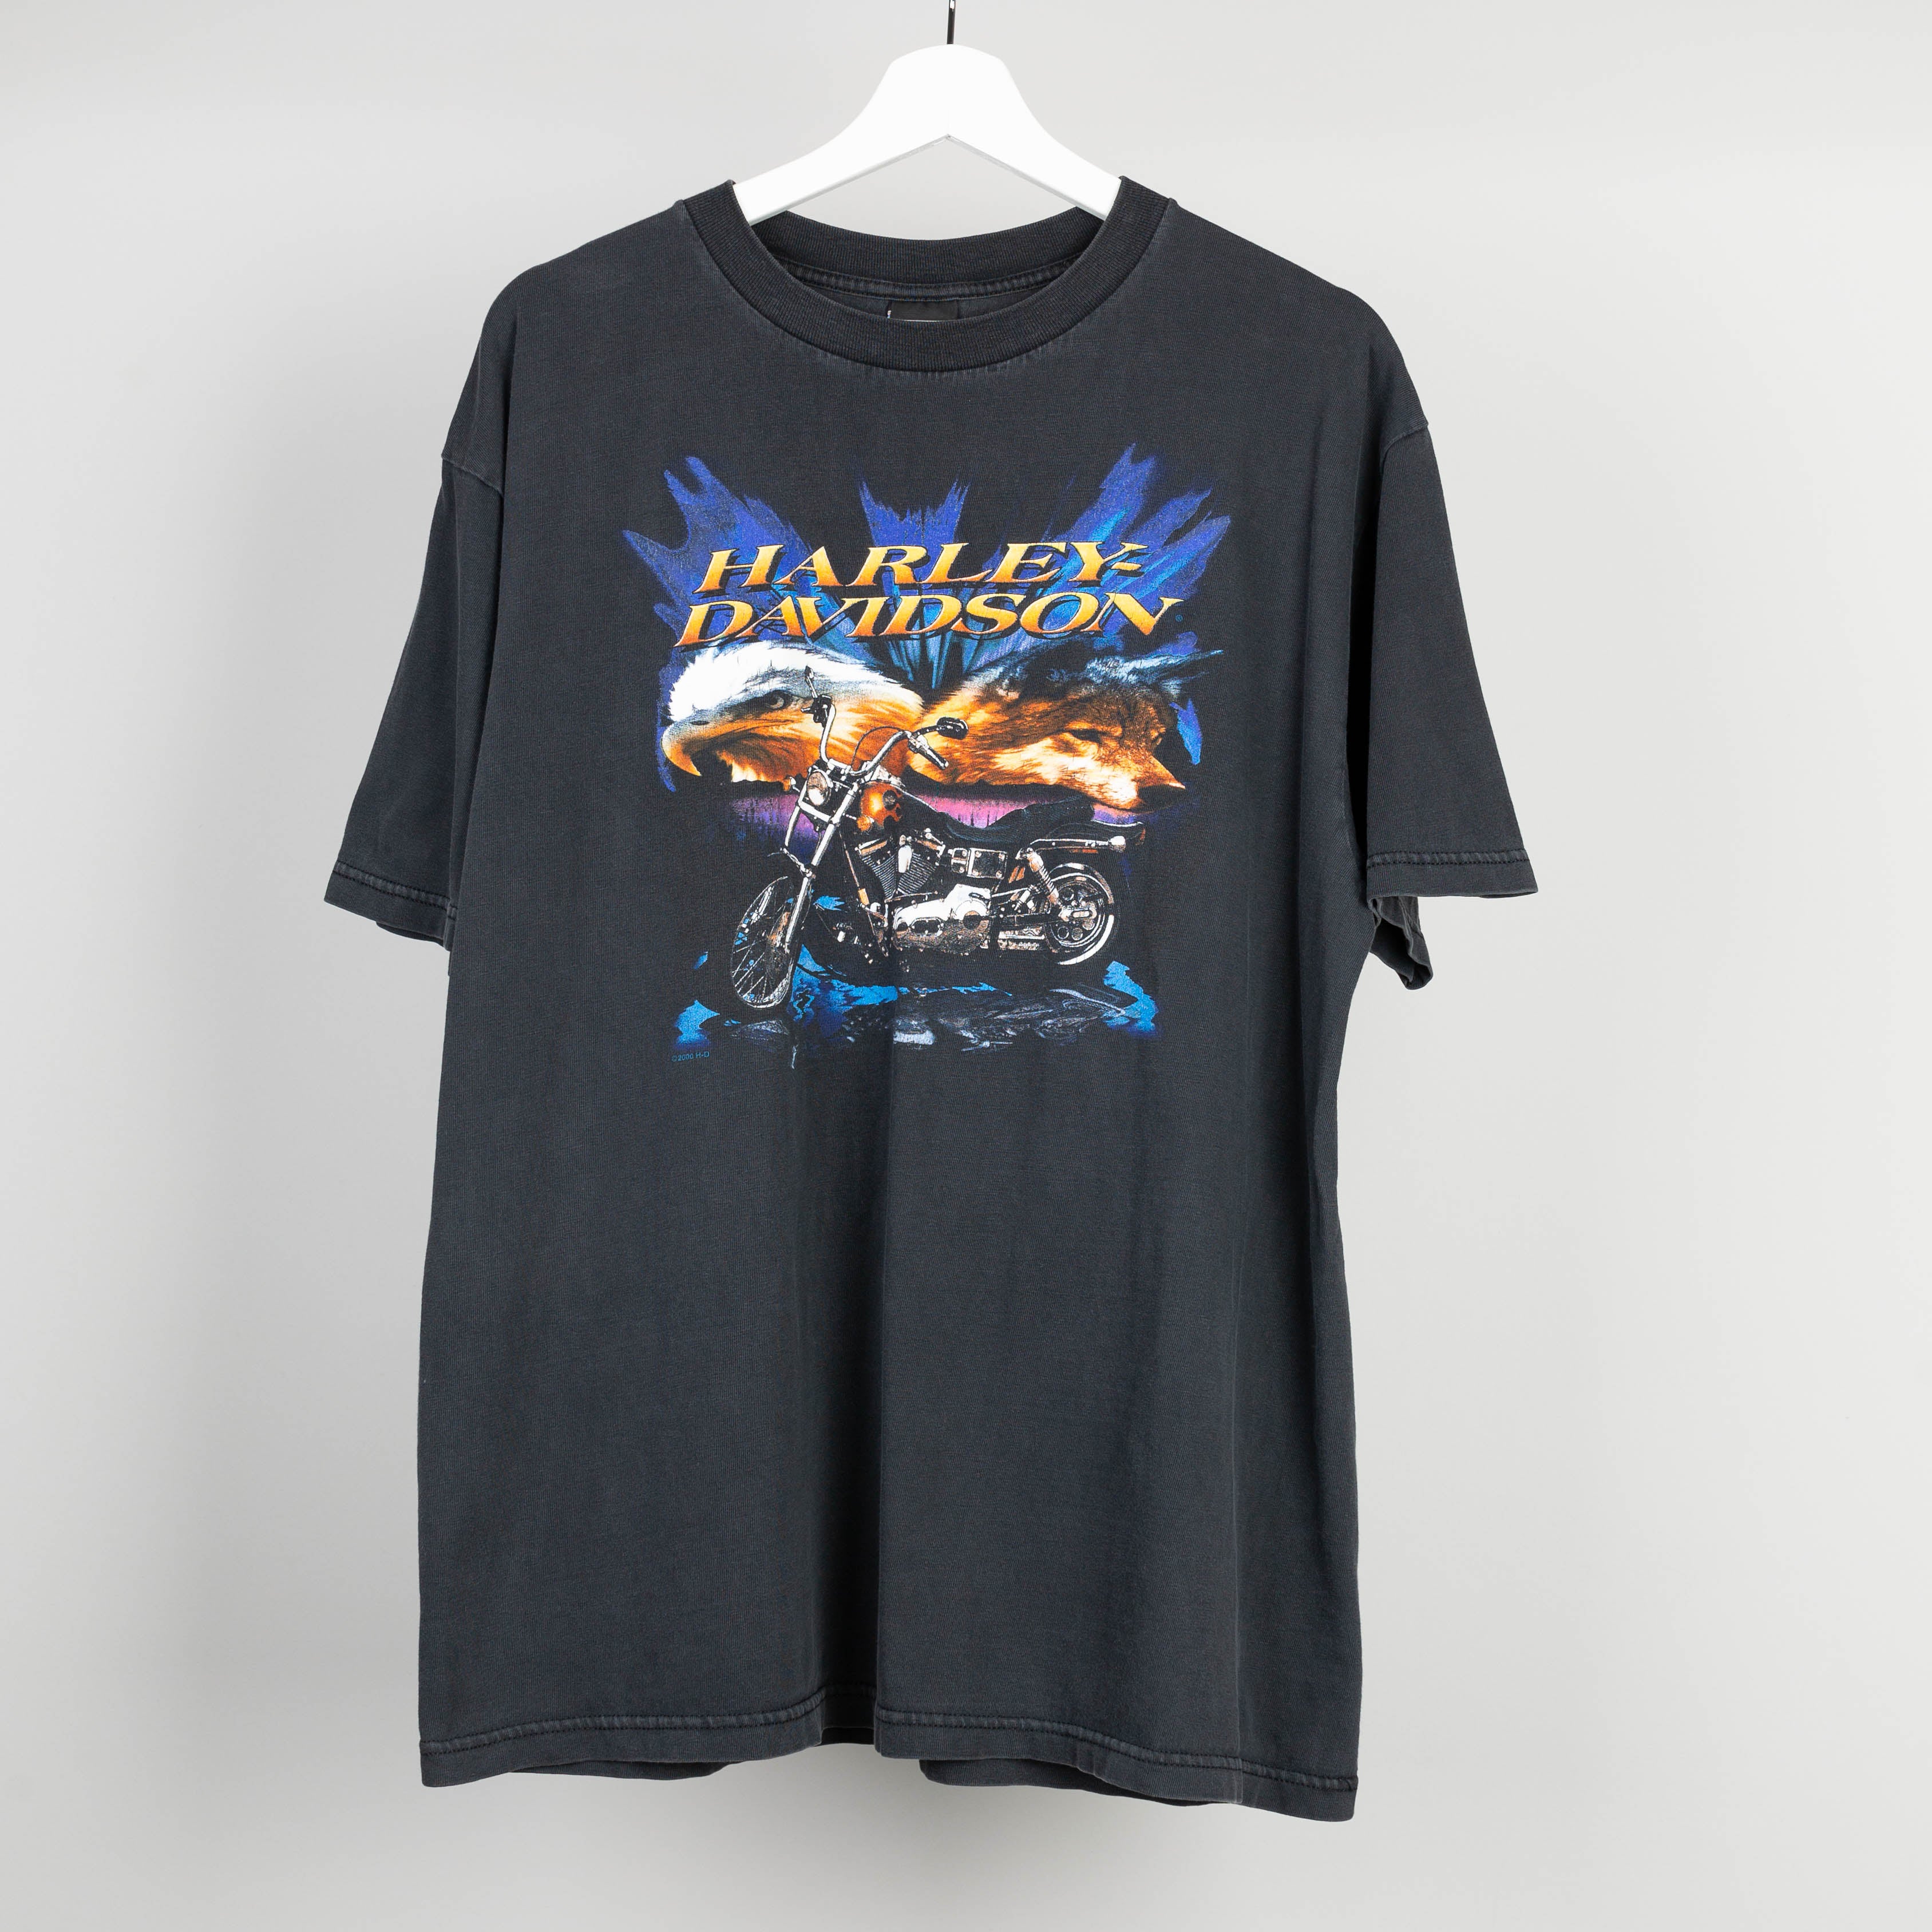 2000 Harley Davidson York Philadelphia T-Shirt Size L